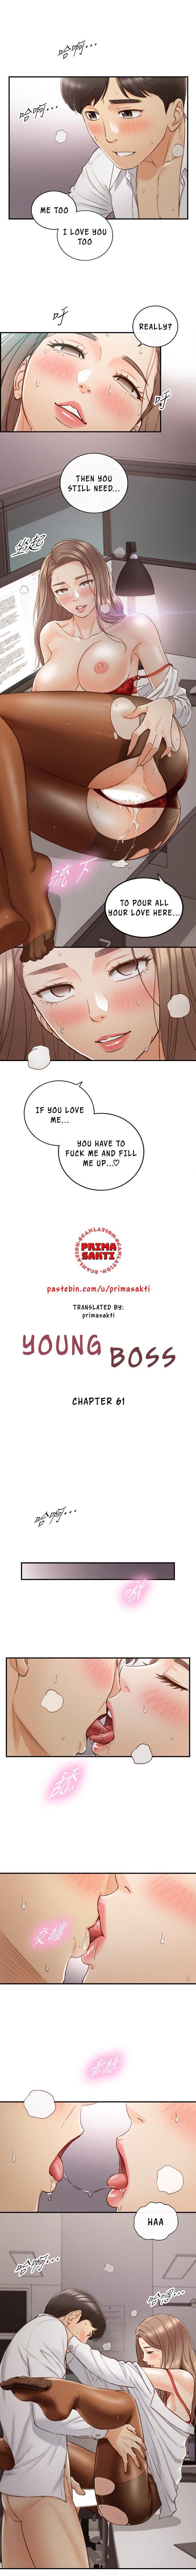 young-boss-001-chap-61-0